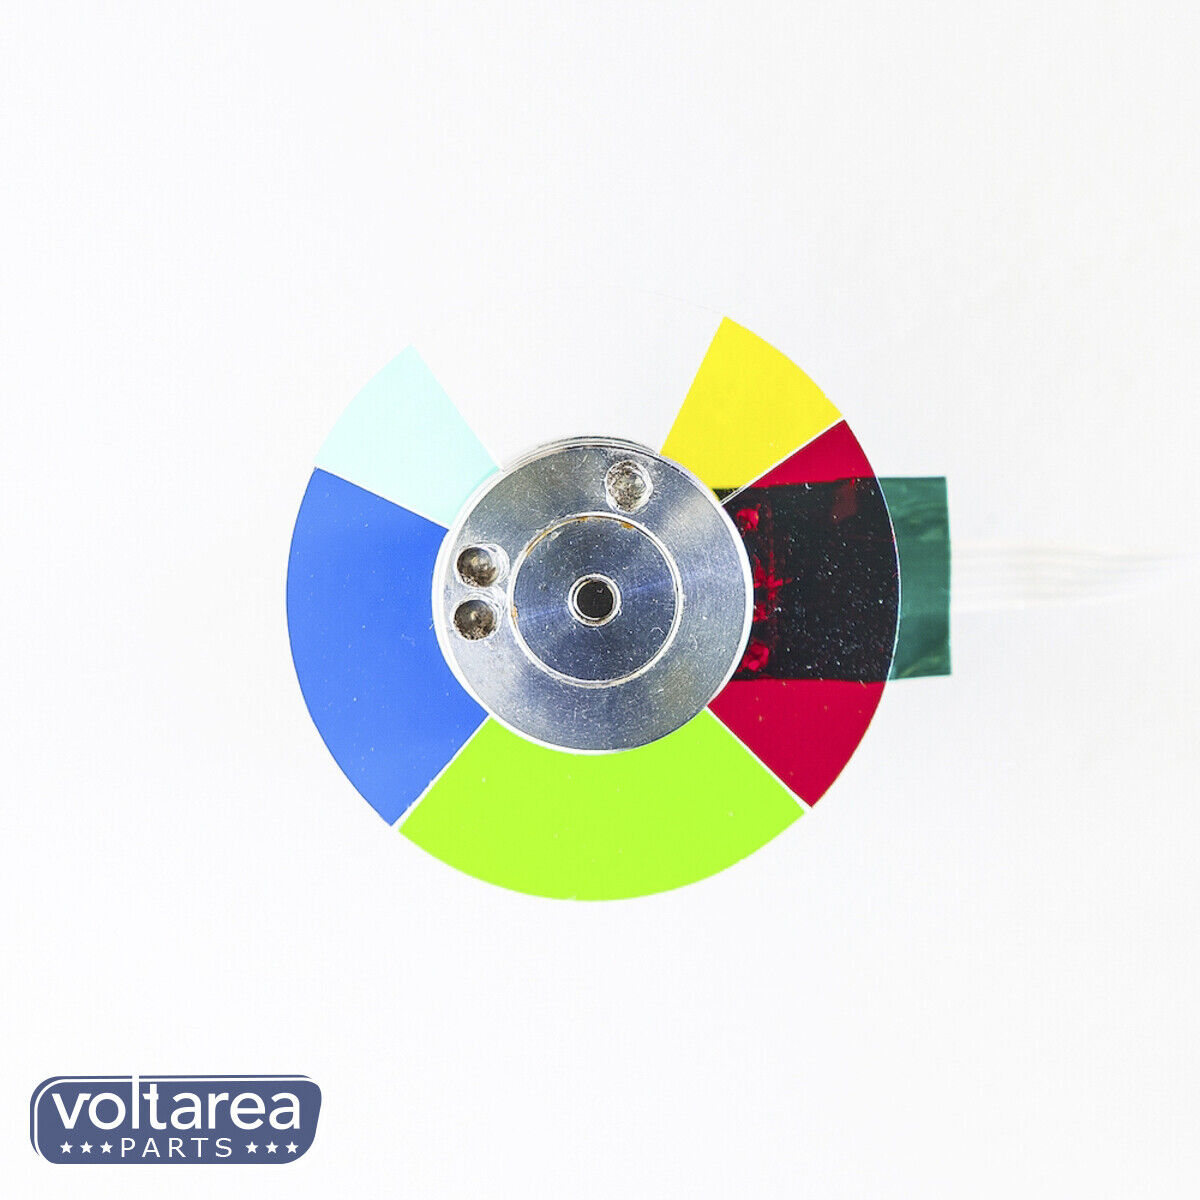 OEM Original Color Wheel for Viewsonic PJD5231 PJD5232 PJD5211 PJD5122 PJD5126 P